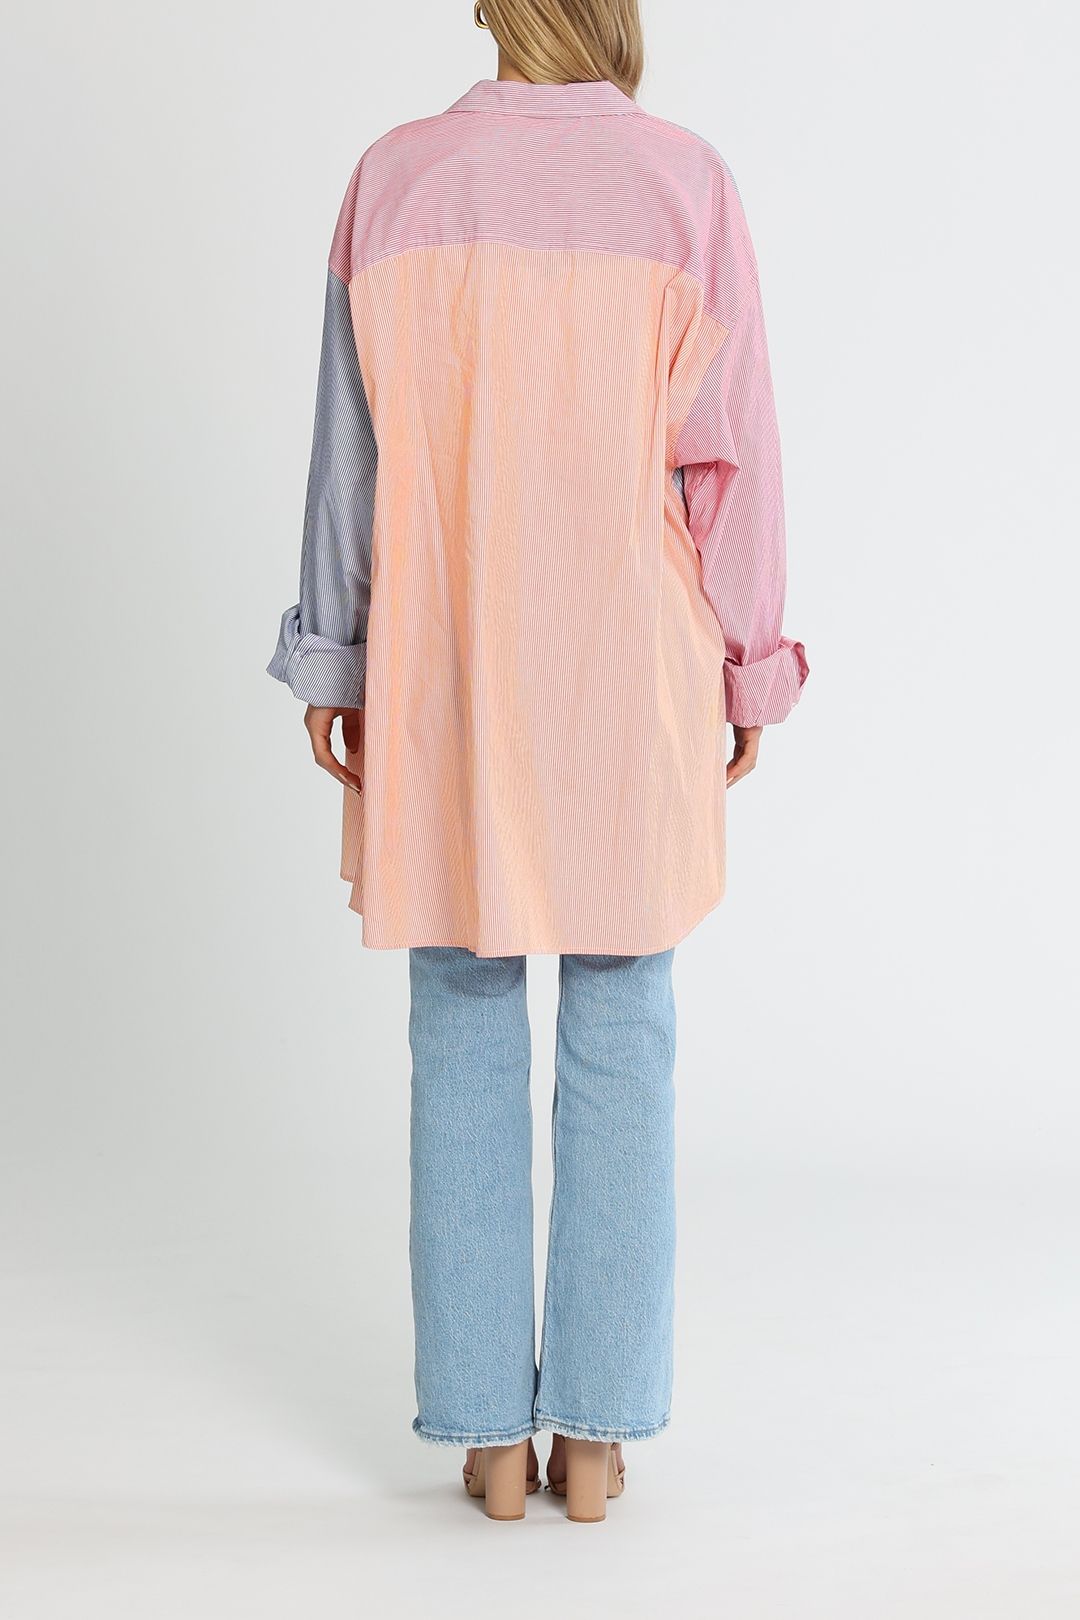 Blanca Benny Shirt Orange Long Length